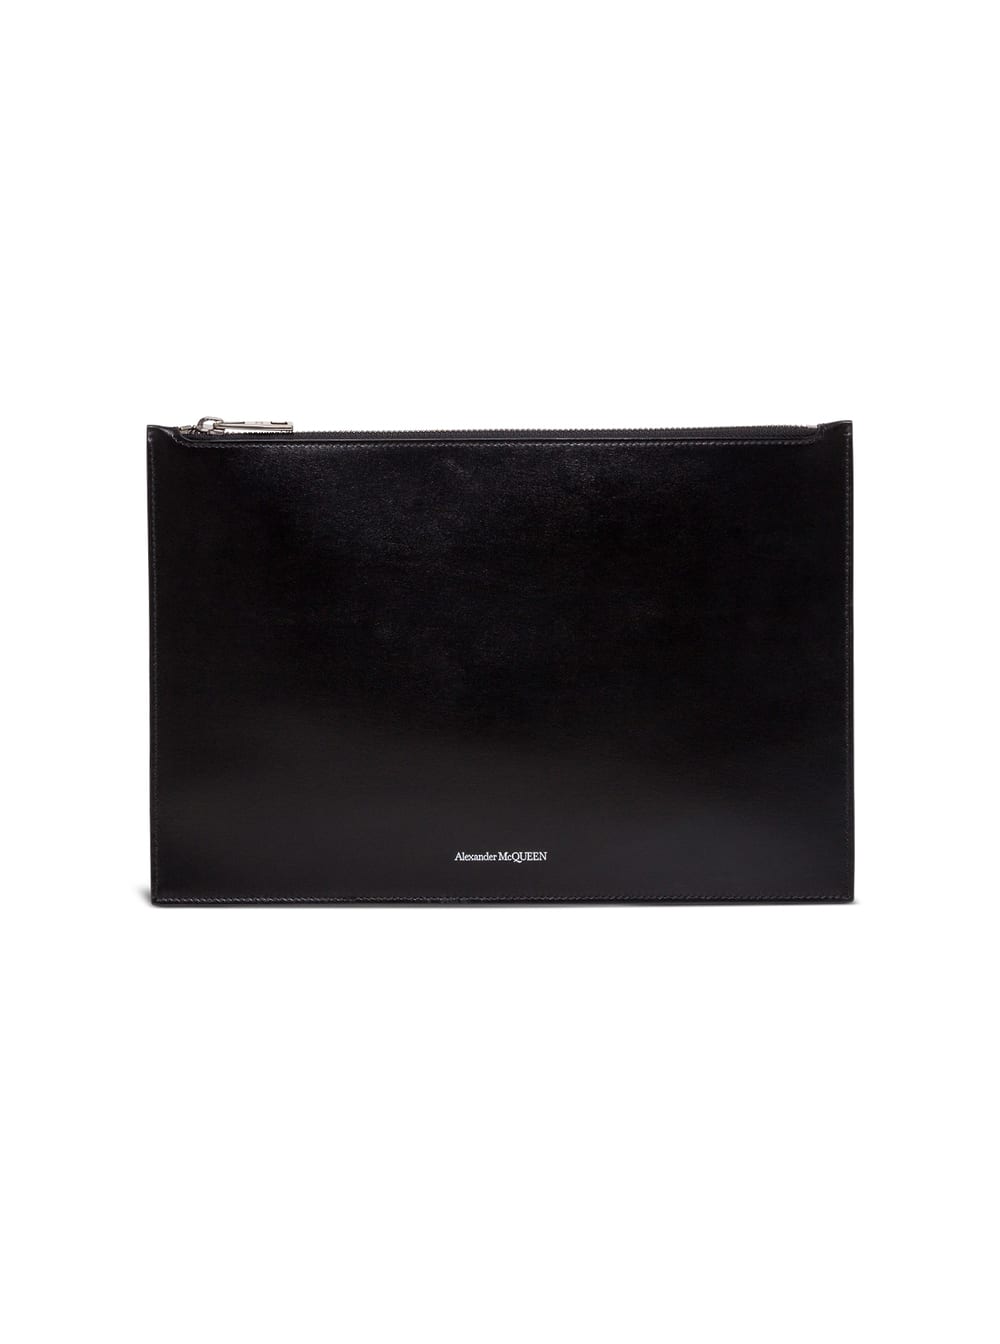 Alexander McQueen Black Leather Handbag With Logo